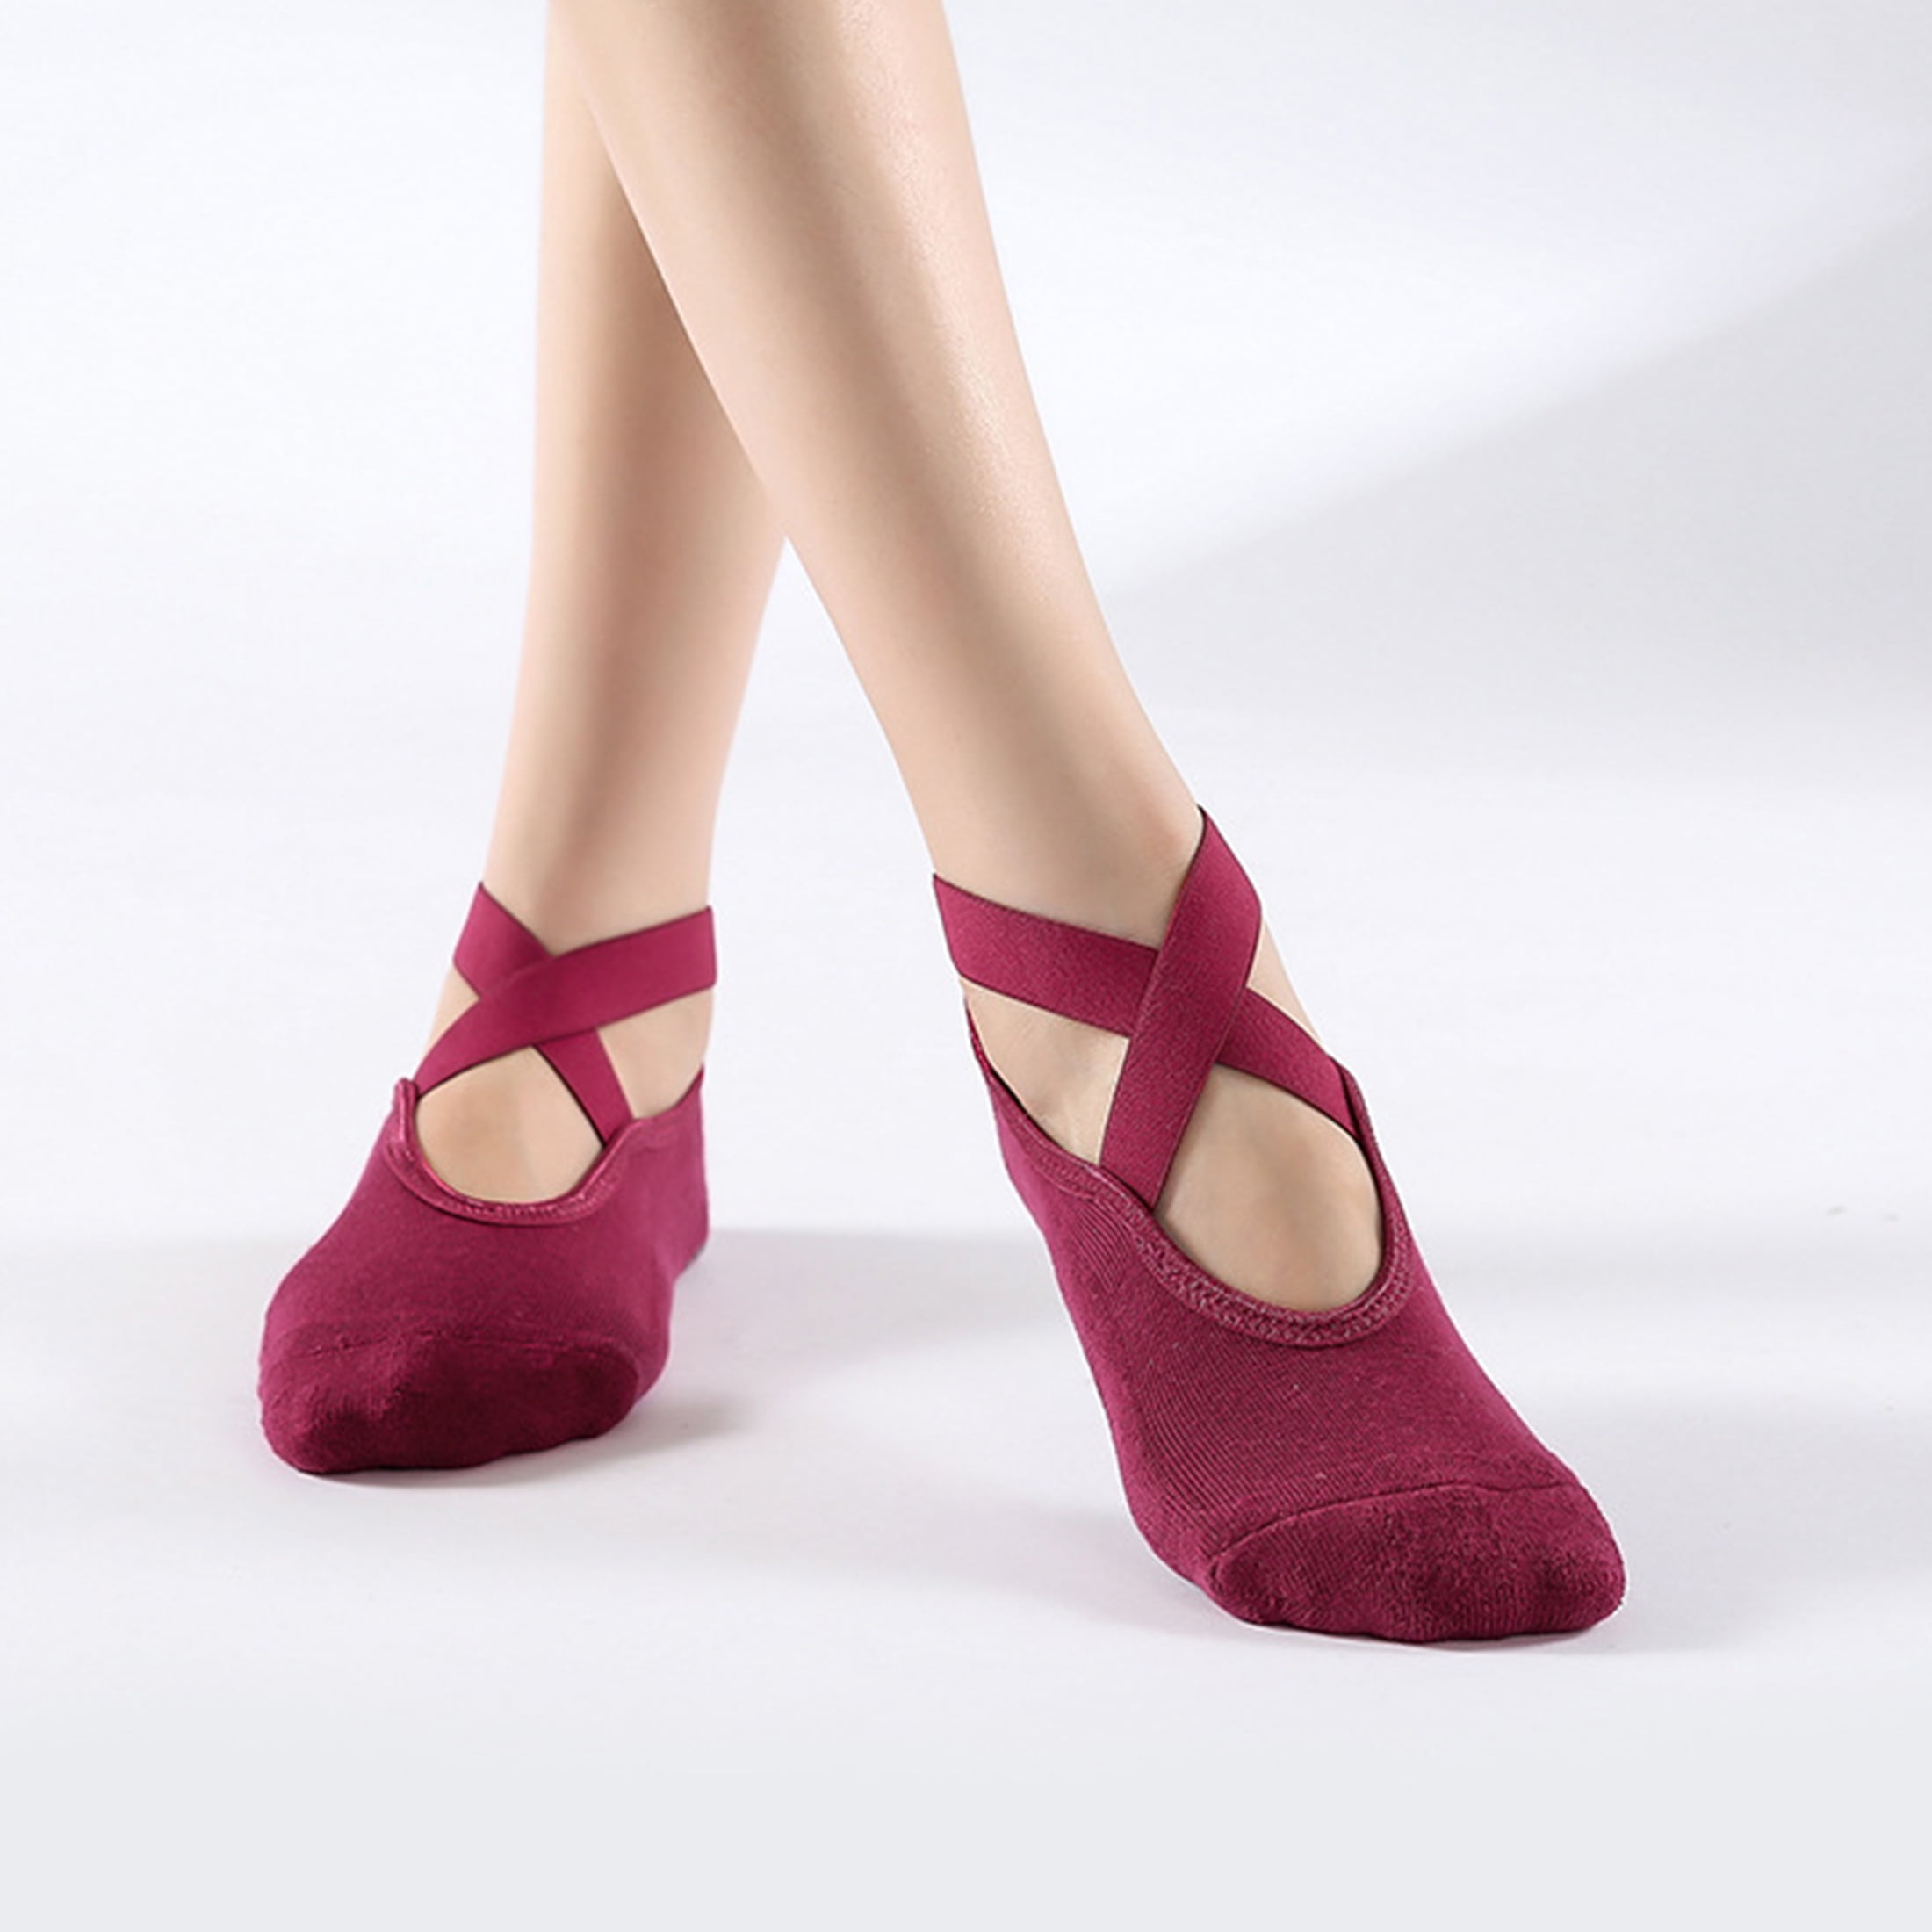 2 Pairs Yoga Socks For Women Non-slip Grips Straps, Ideal For Pilates, Pure  Barre, Ballet, Dance